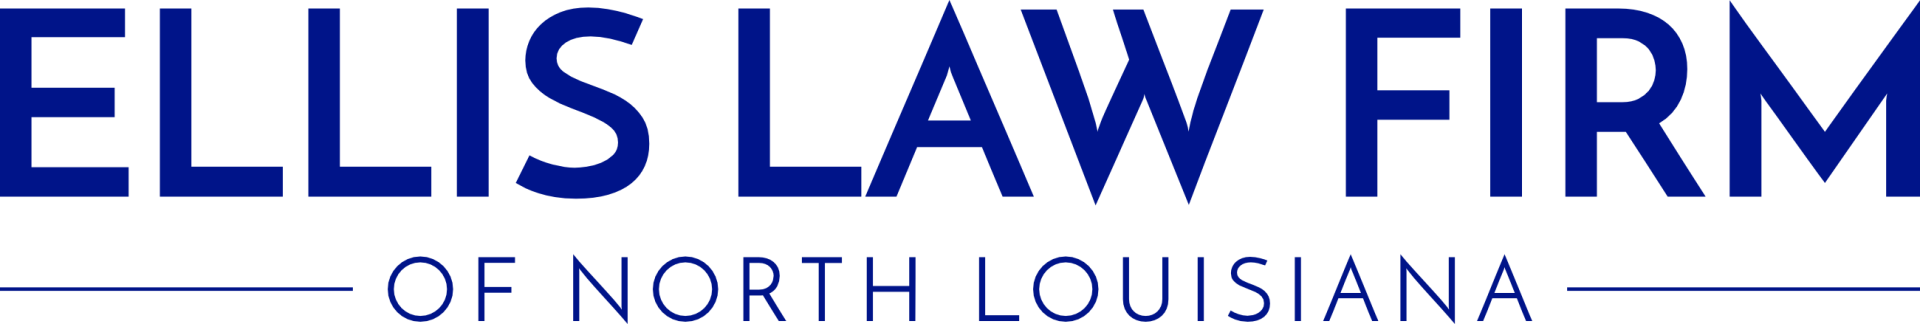 Ellis Law Firm of North Louisiana - Logo